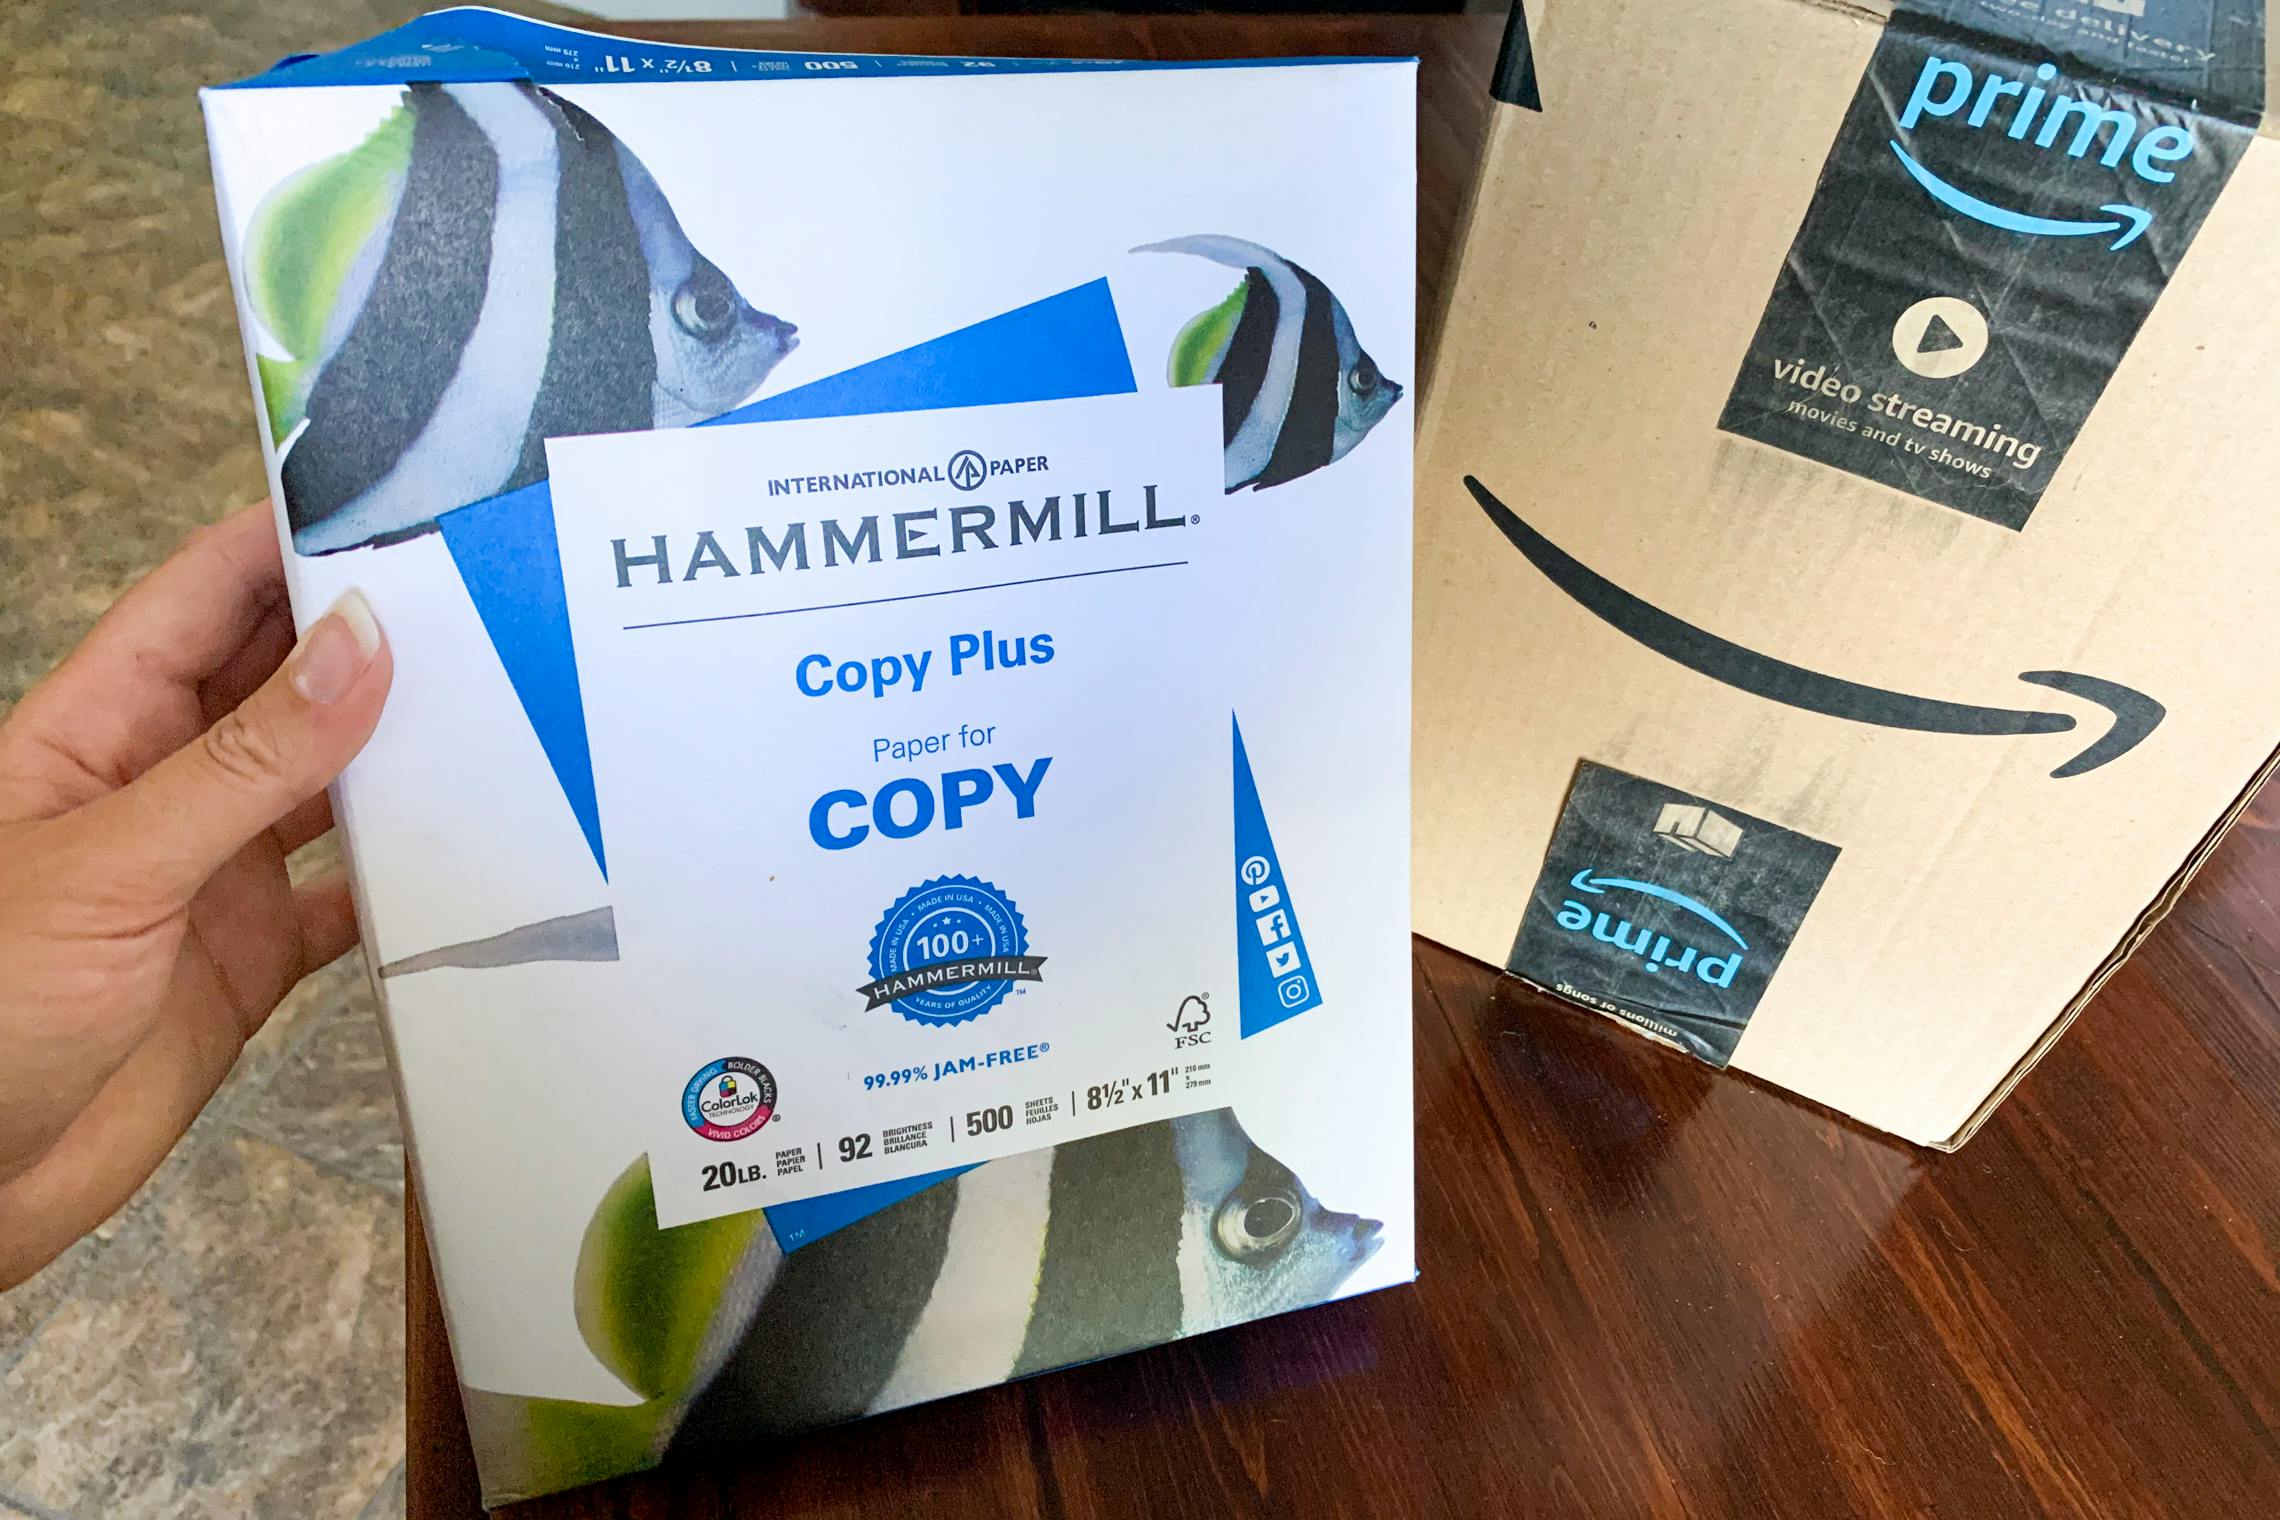 Hammermill copy paper next to an amazon box.